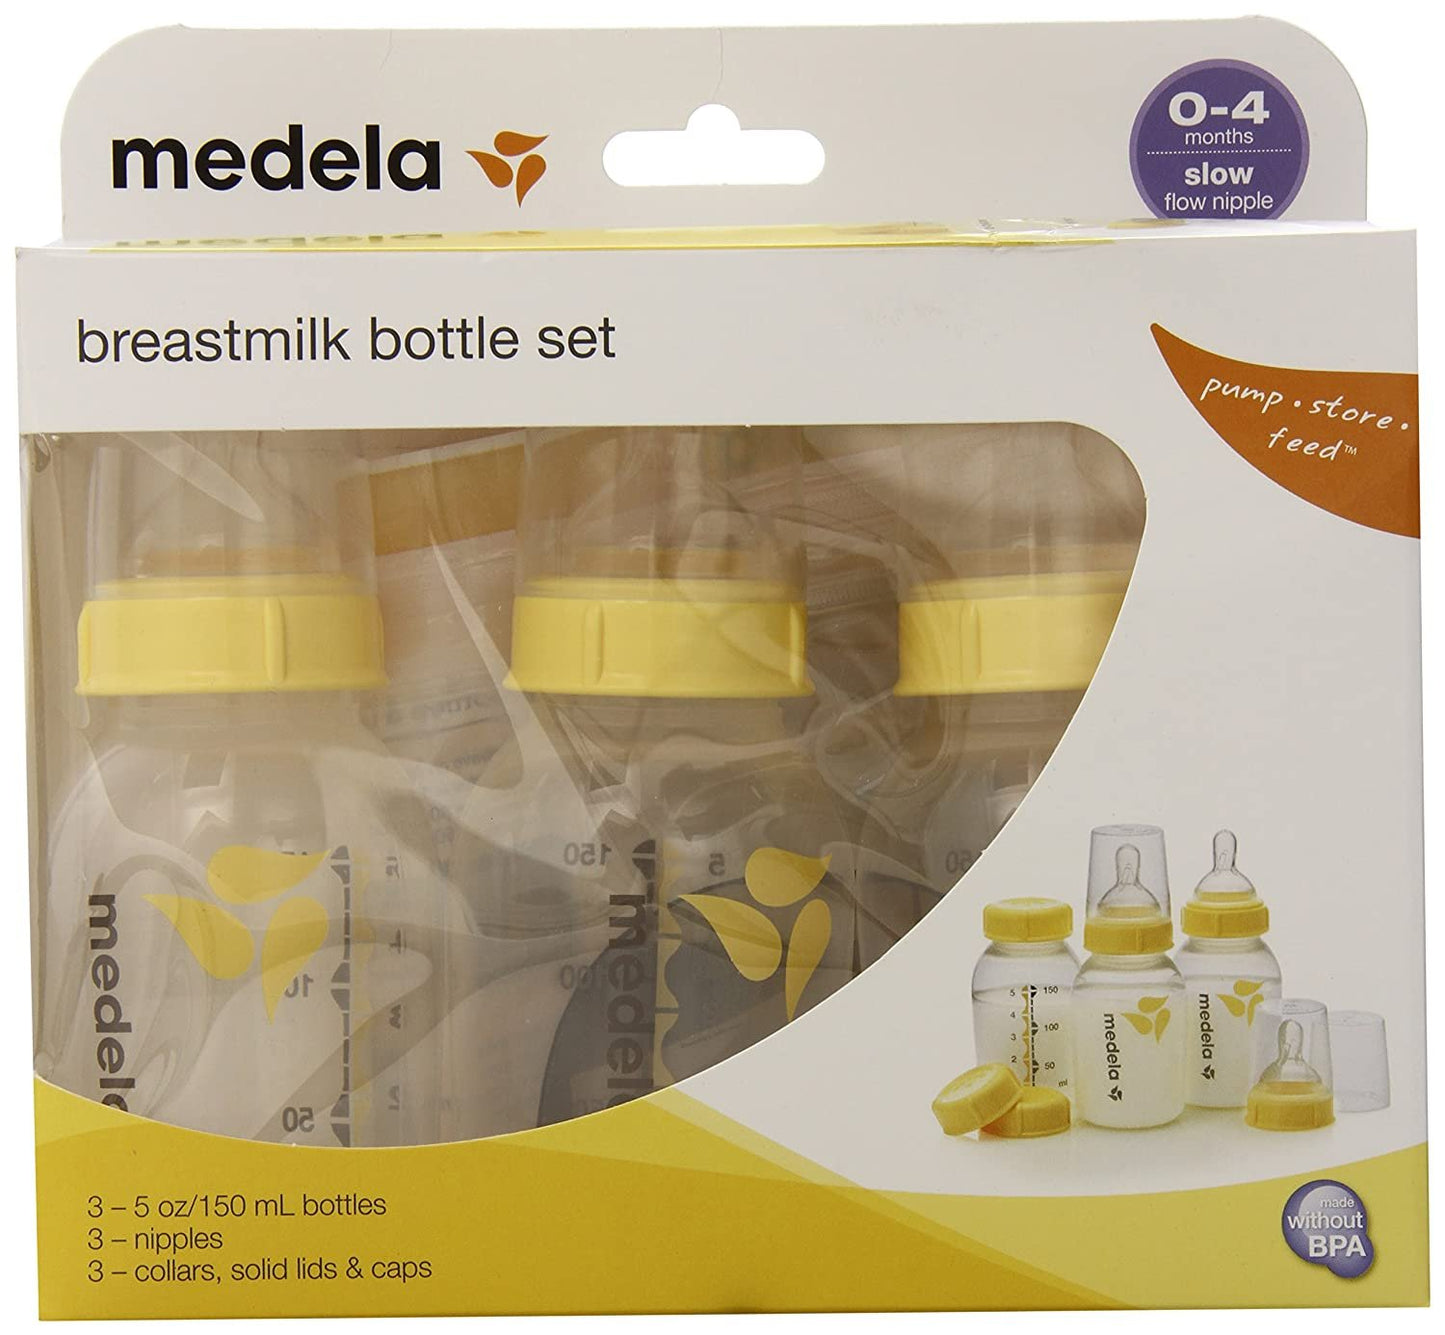 Medela Breastmilk Bottle Set 5oz (3 bottles per package)